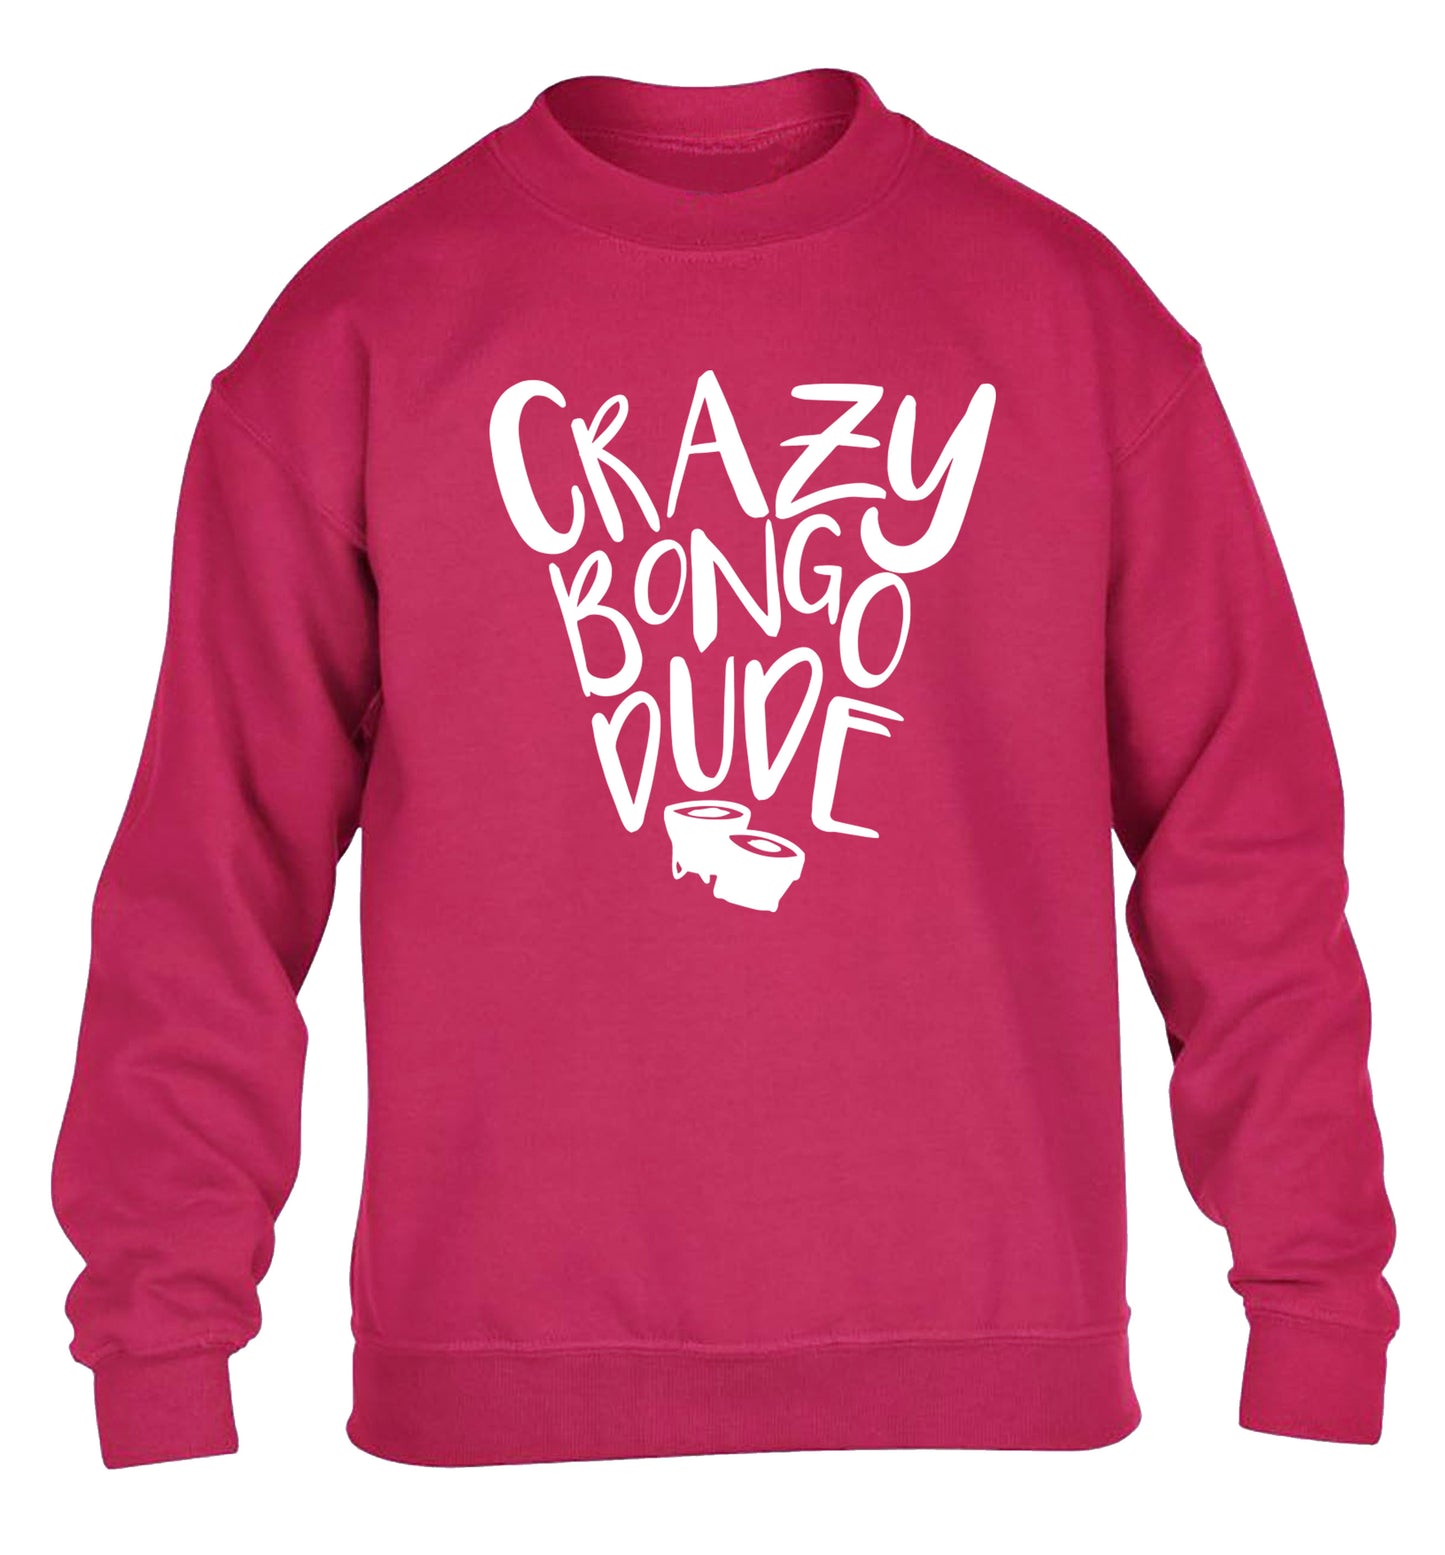 Crazy bongo dude children's pink sweater 12-14 Years